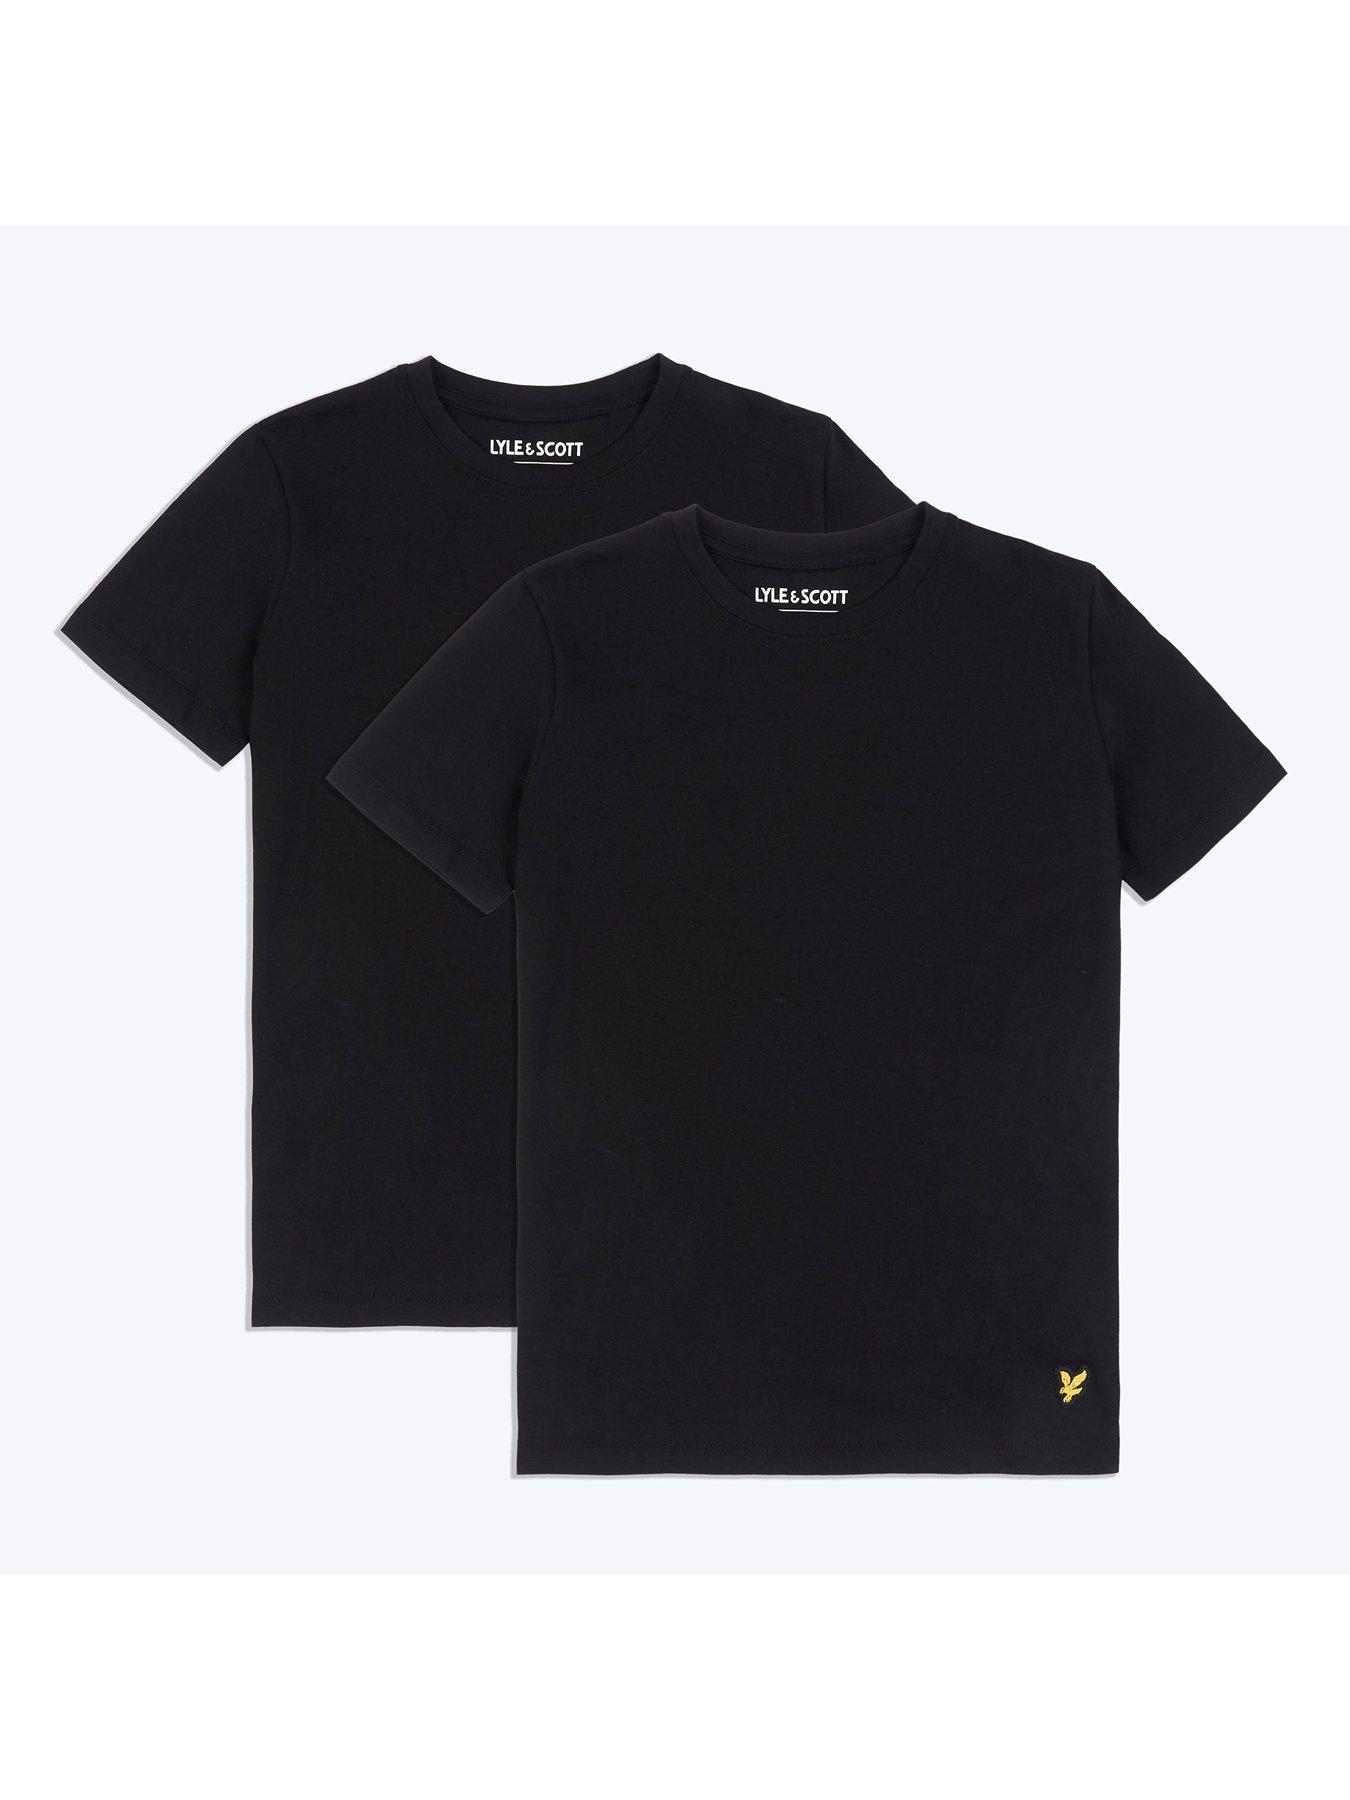 Boys Clothes Boys 2 Pack Lounge T Shirts - Black